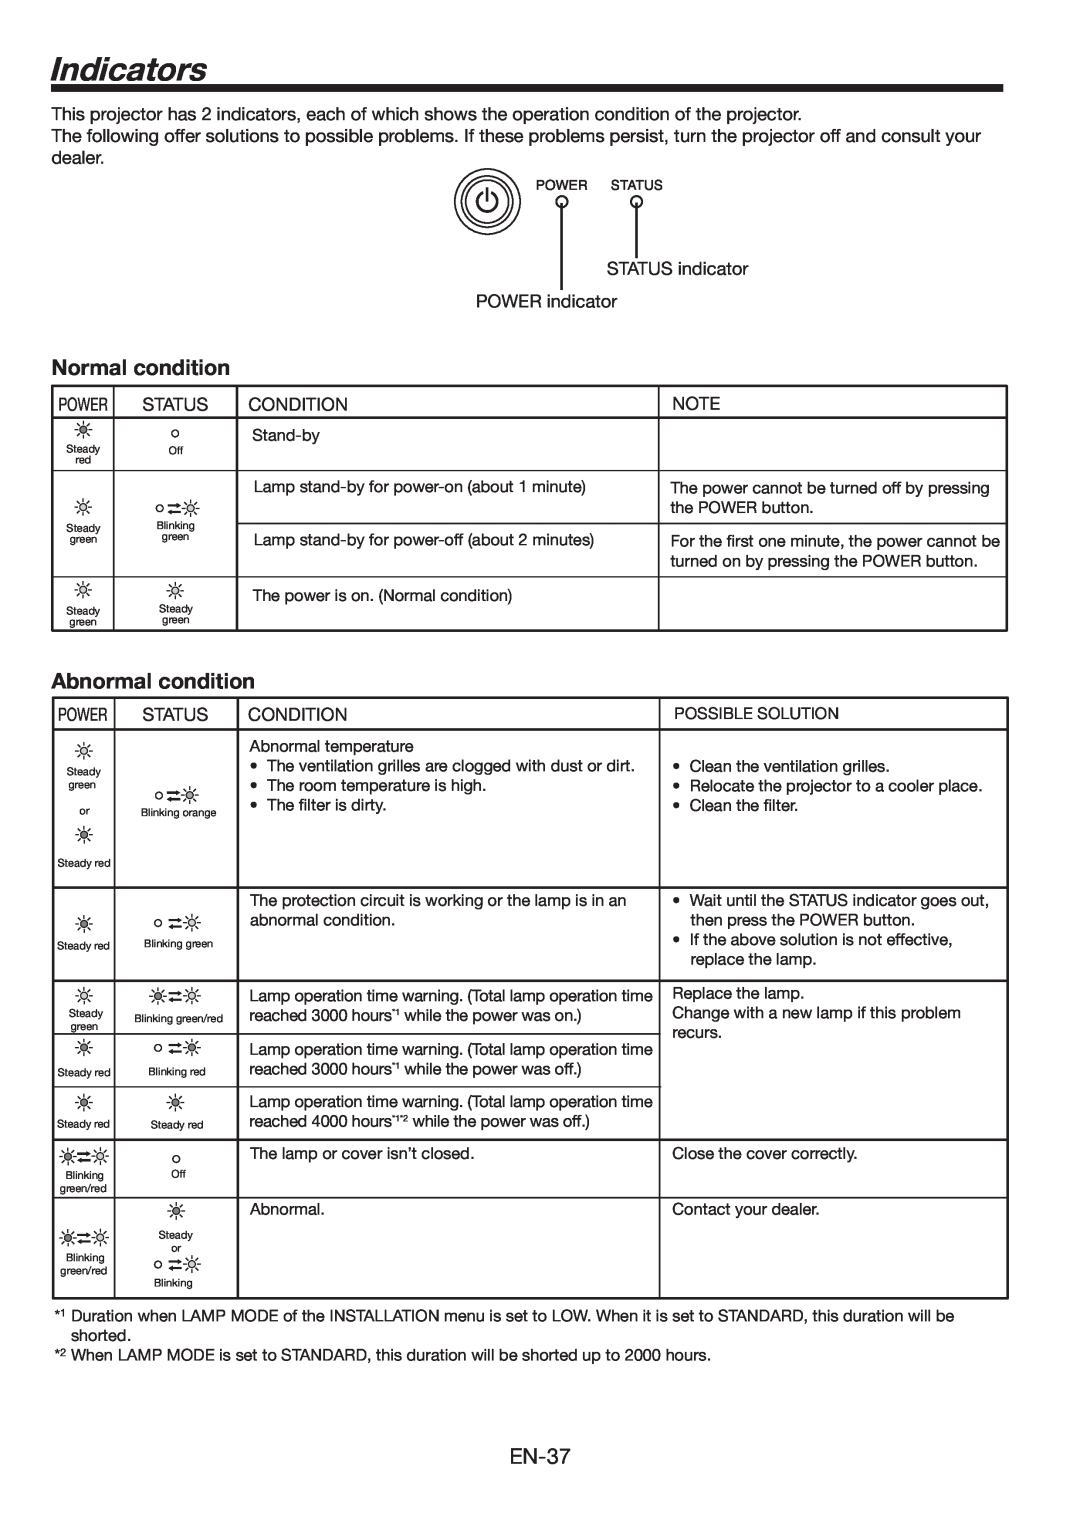 Mitsubishi Electronics FL6900U user manual Indicators, Normal condition, Abnormal condition 